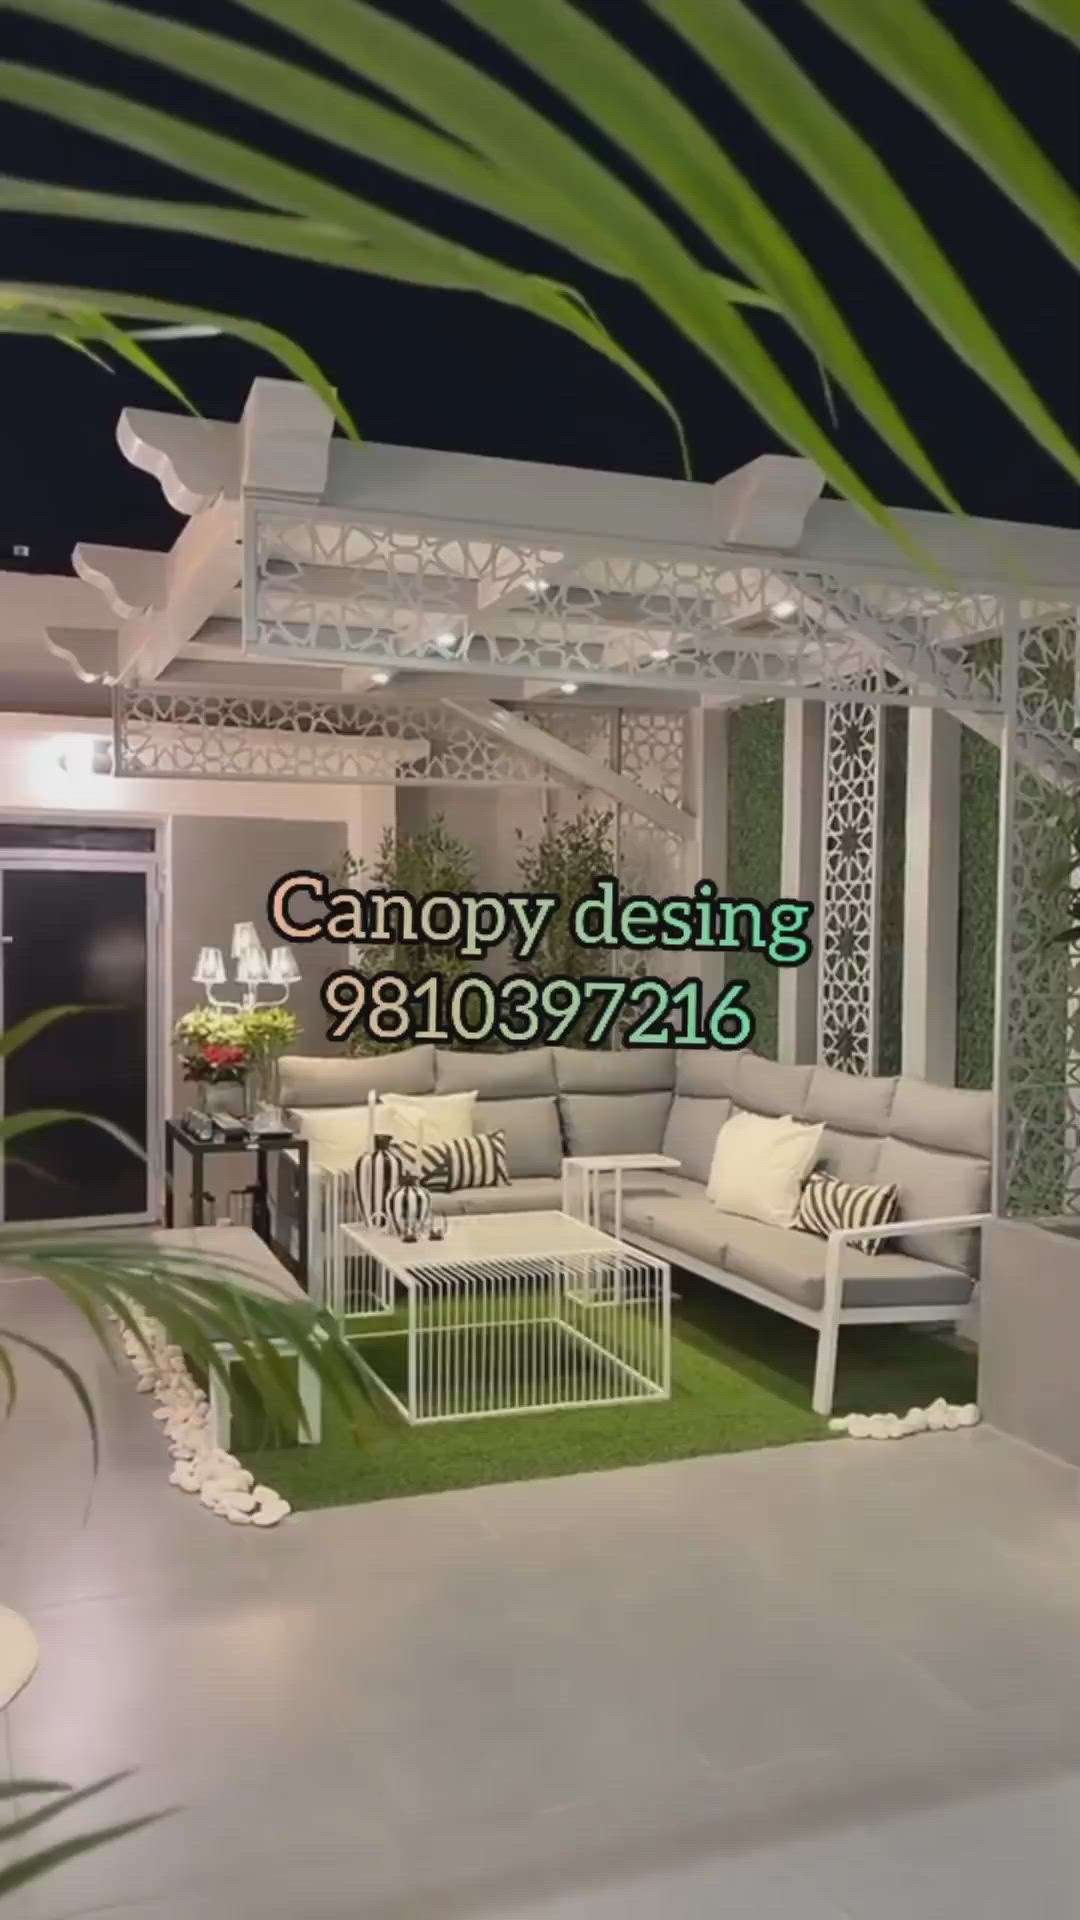 canopy desing by hibza starling interiors Pvt Ltd manufacturer in delhi gurgaon Faridabad gaziabad all india  #canopydesing  #pergoladesing   #Aluminiumprofilegate #maingates